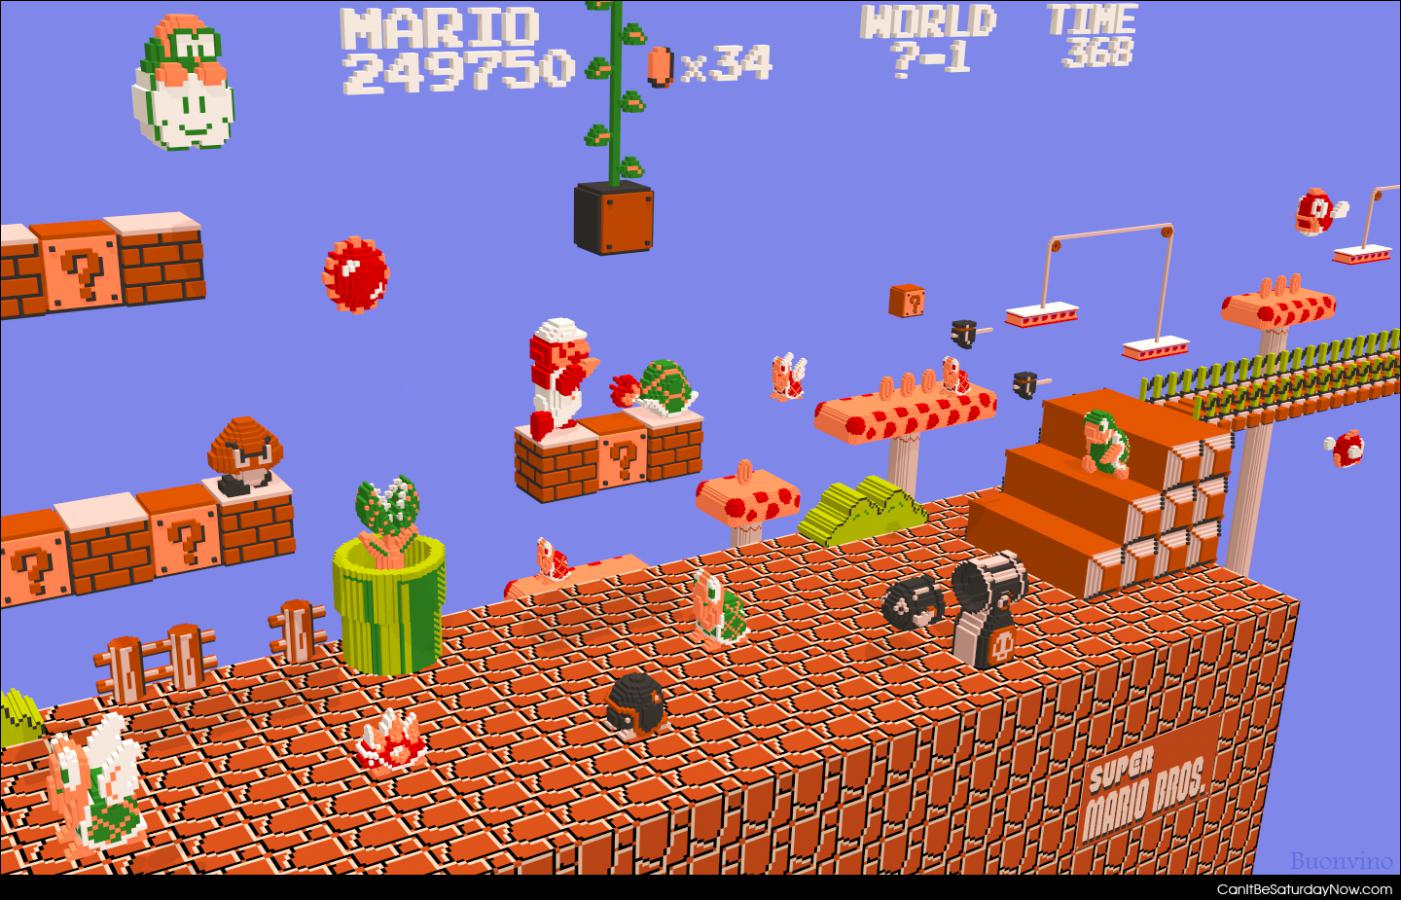 3d smw2 - 3d view of super Mario world